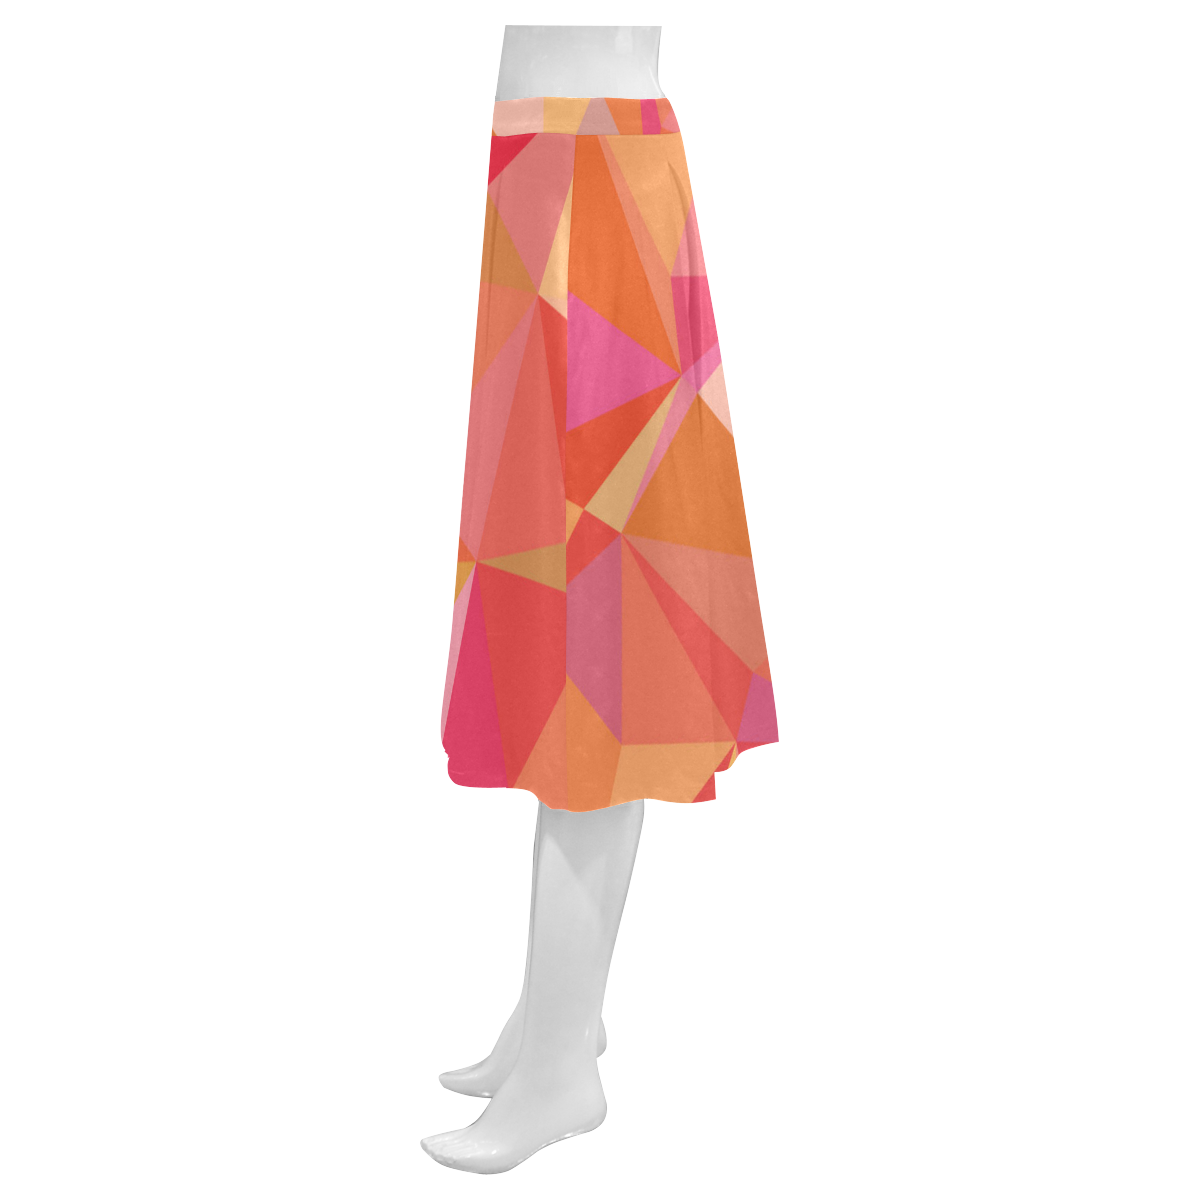 Mosaic Pattern 3 Mnemosyne Women's Crepe Skirt (Model D16)